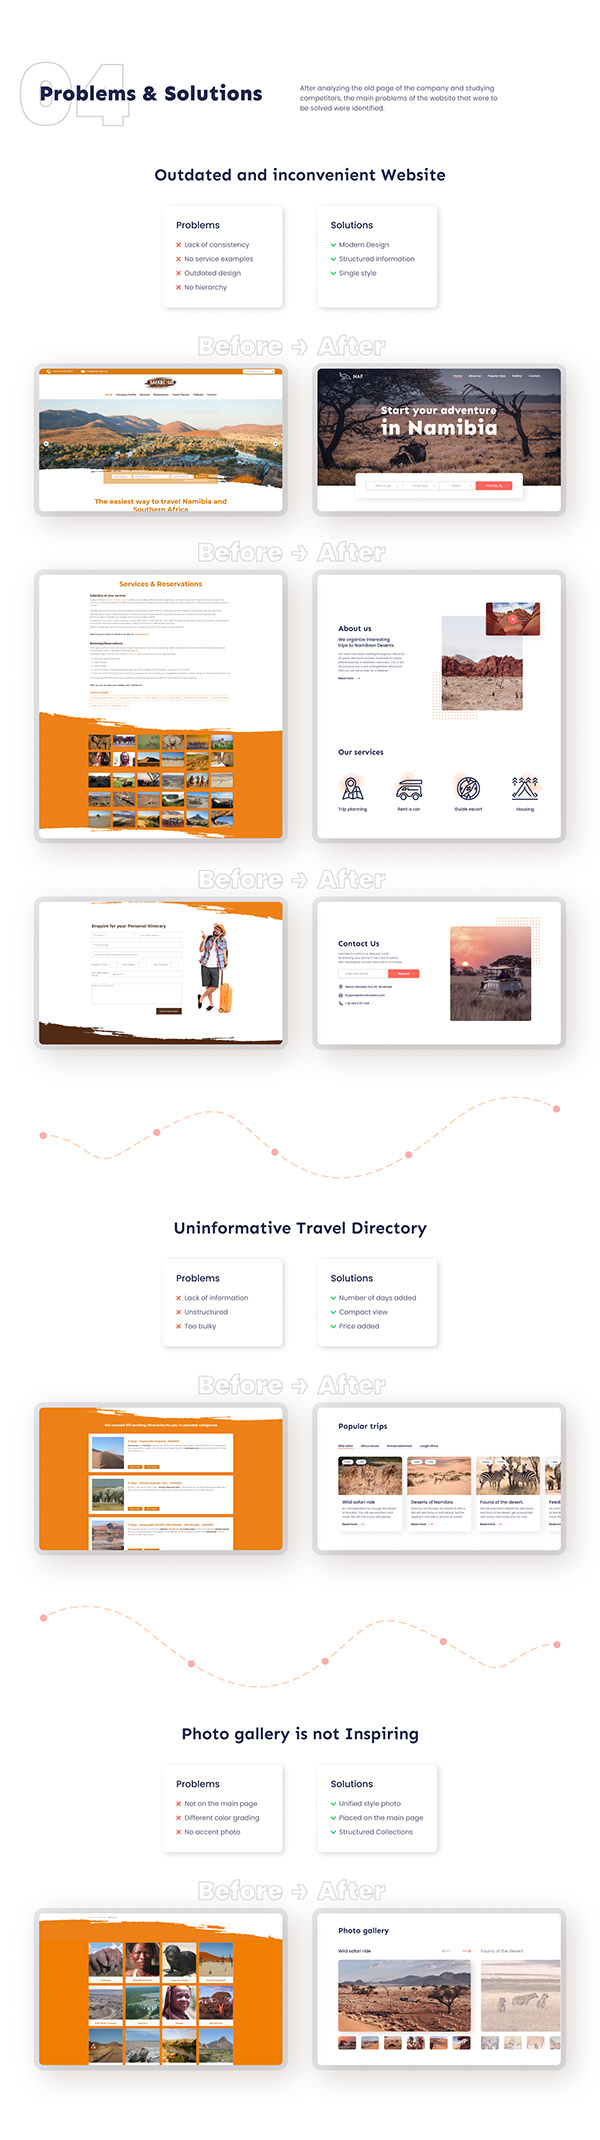 Travel agency website - UX/UI design